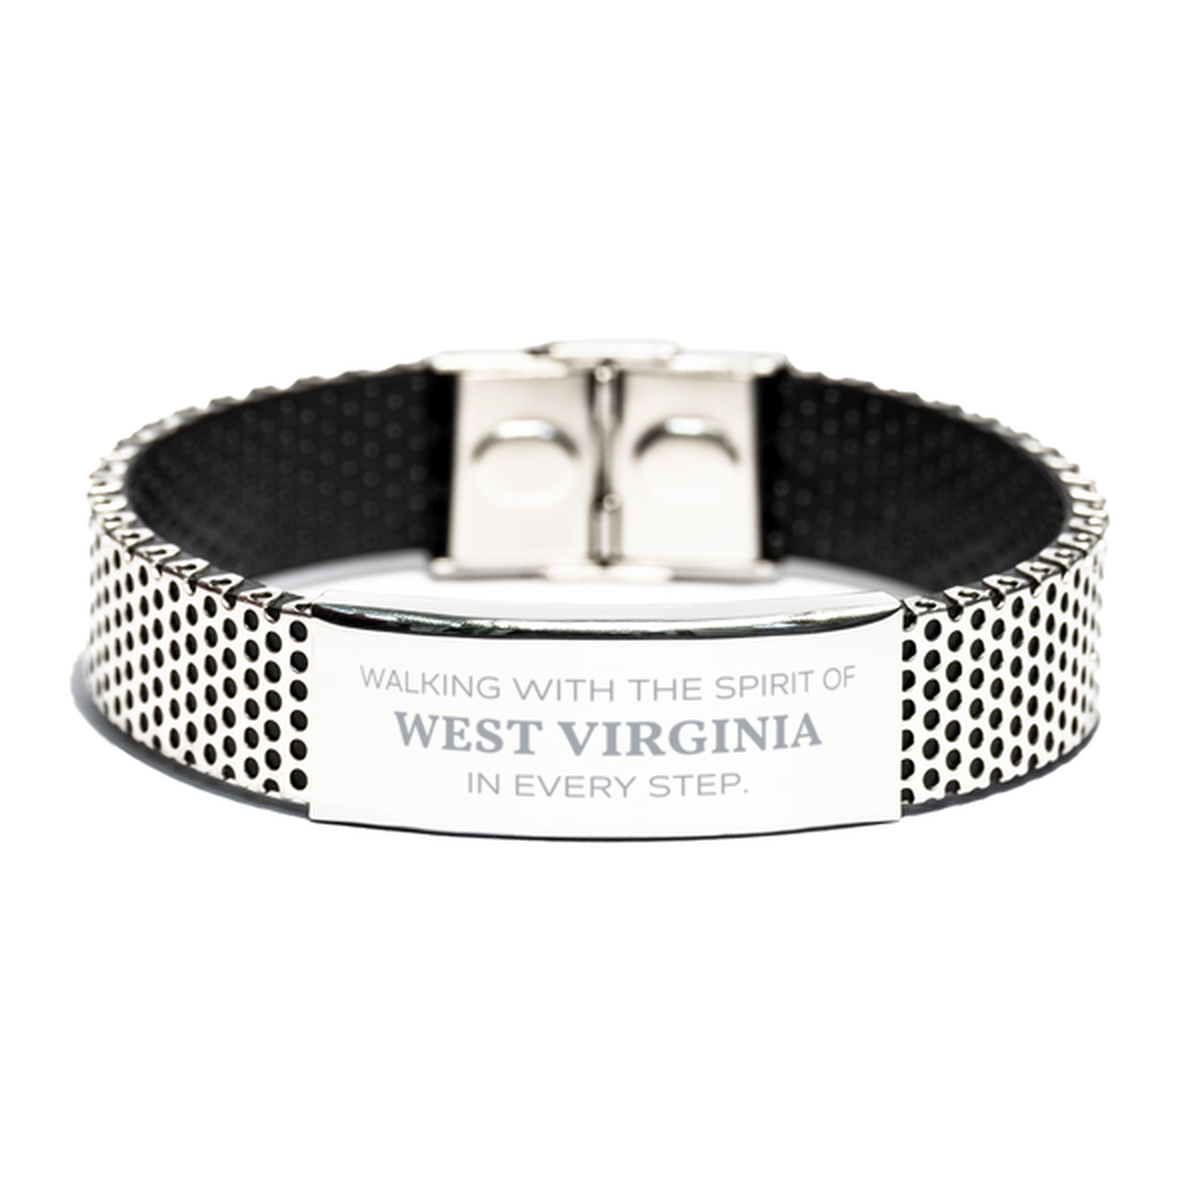 West Virginia Gifts, Walking with the spirit, Love West Virginia Birthday Christmas Stainless Steel Bracelet For West Virginia People, Men, Women, Friends